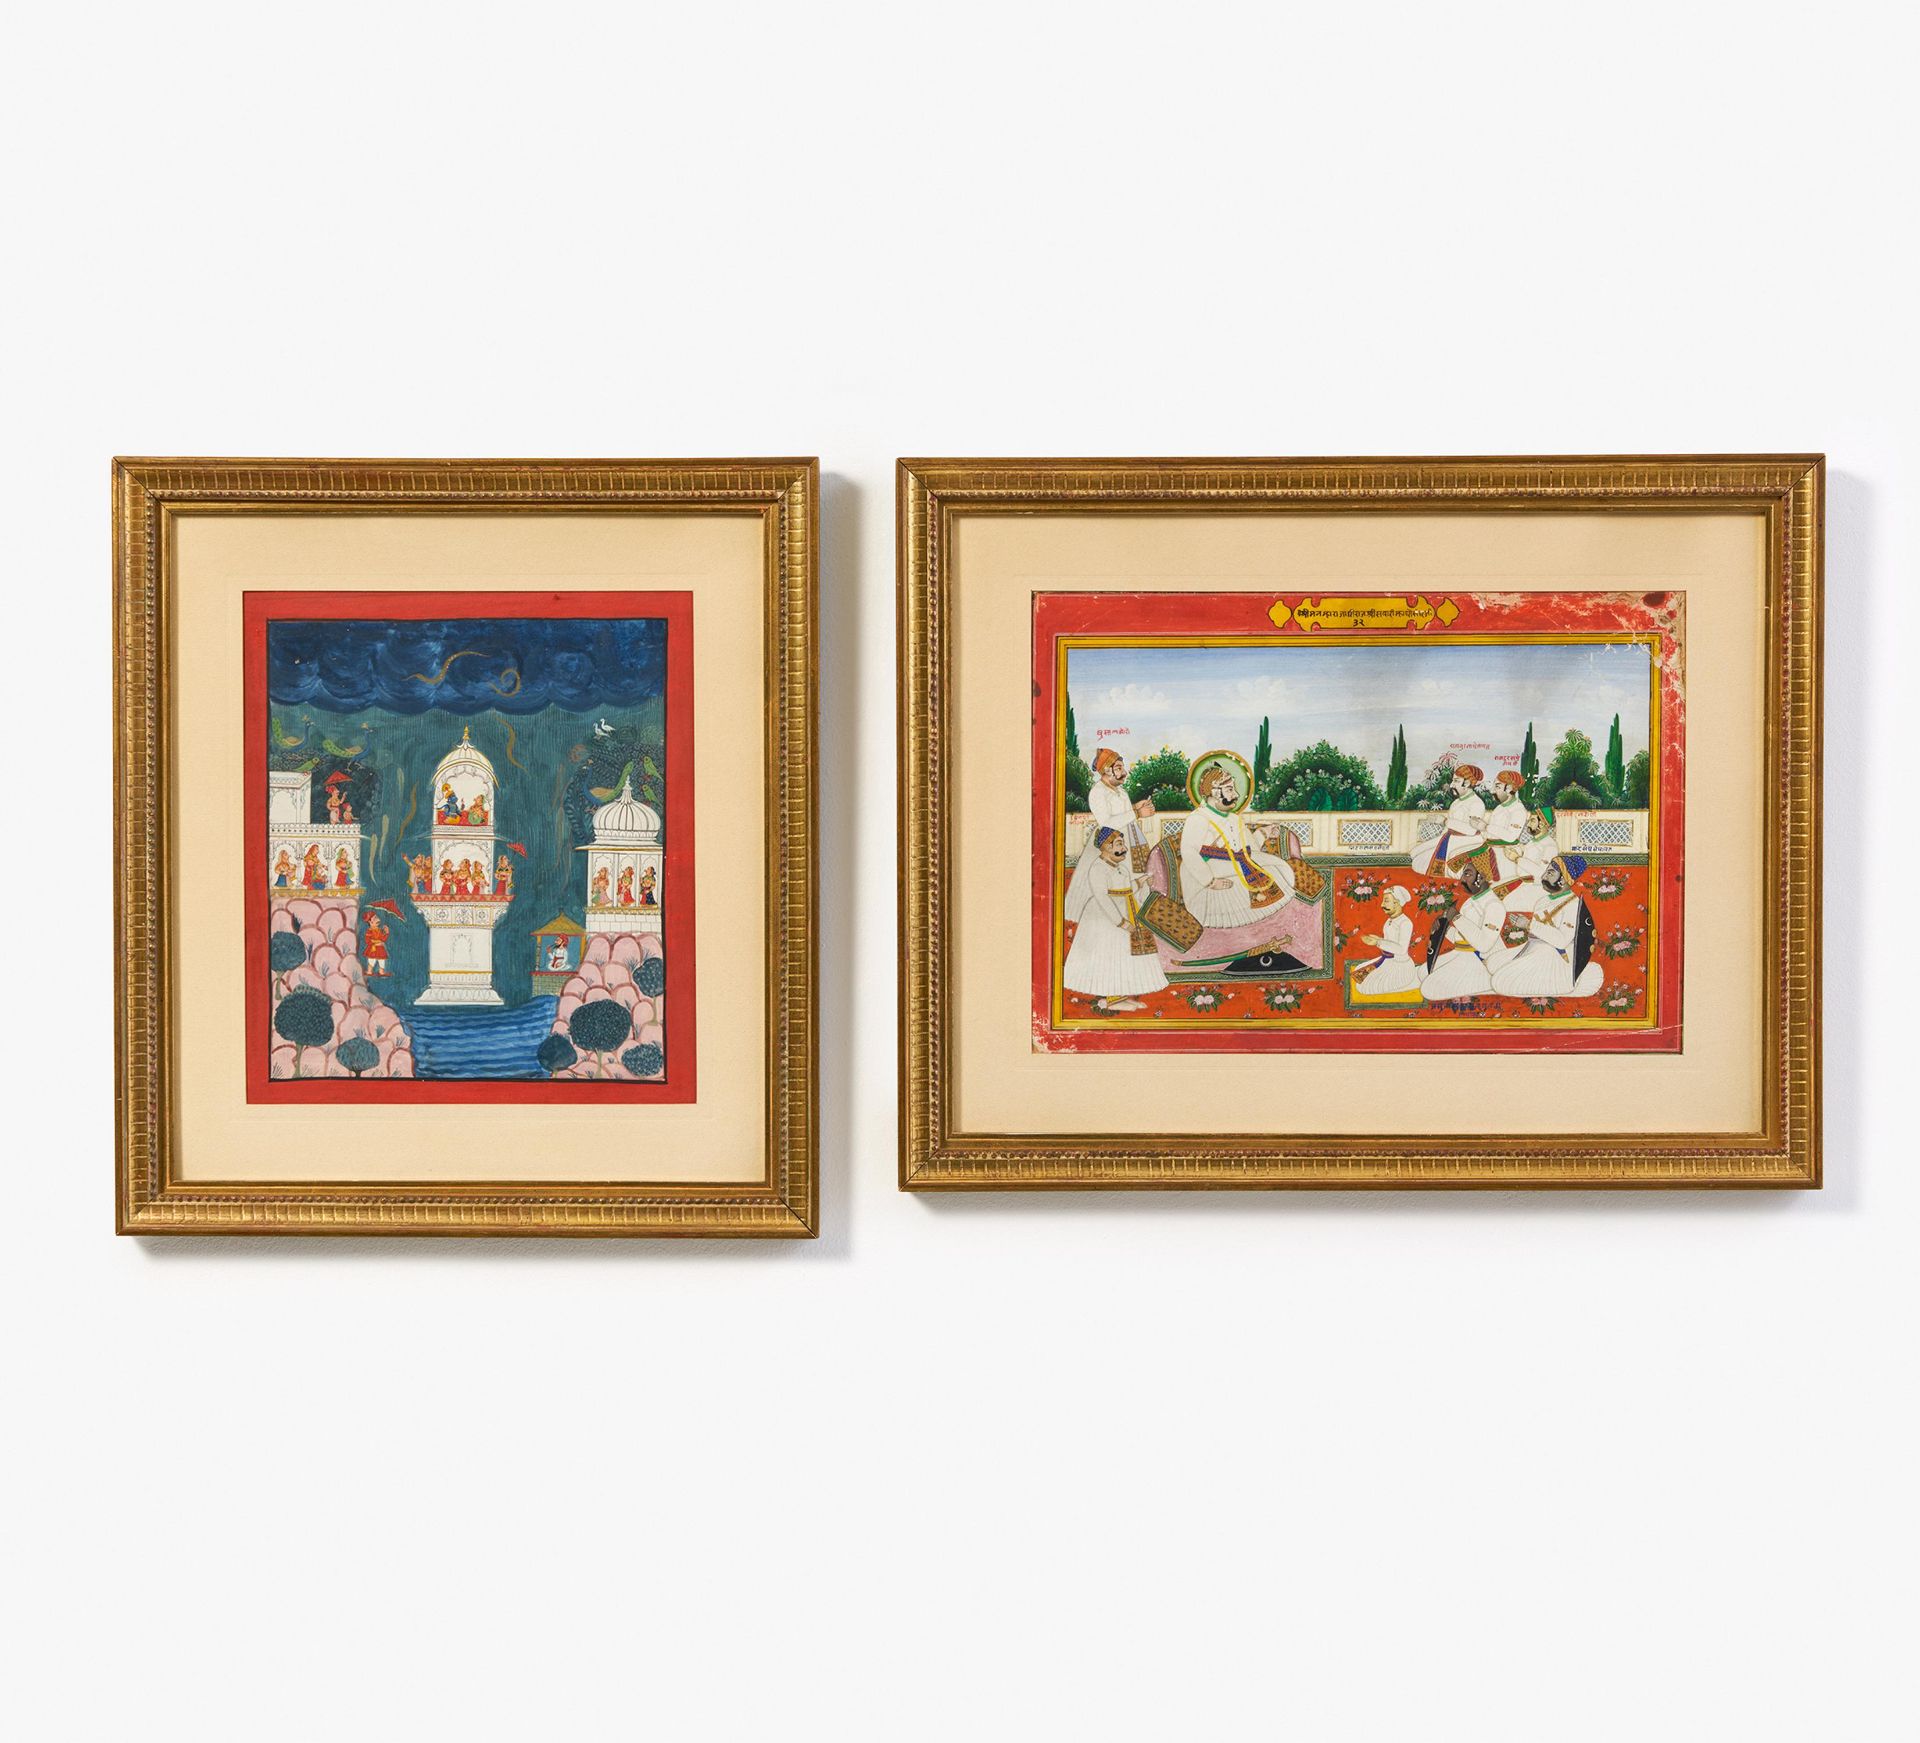 Two painting with Maharadja and Krishna